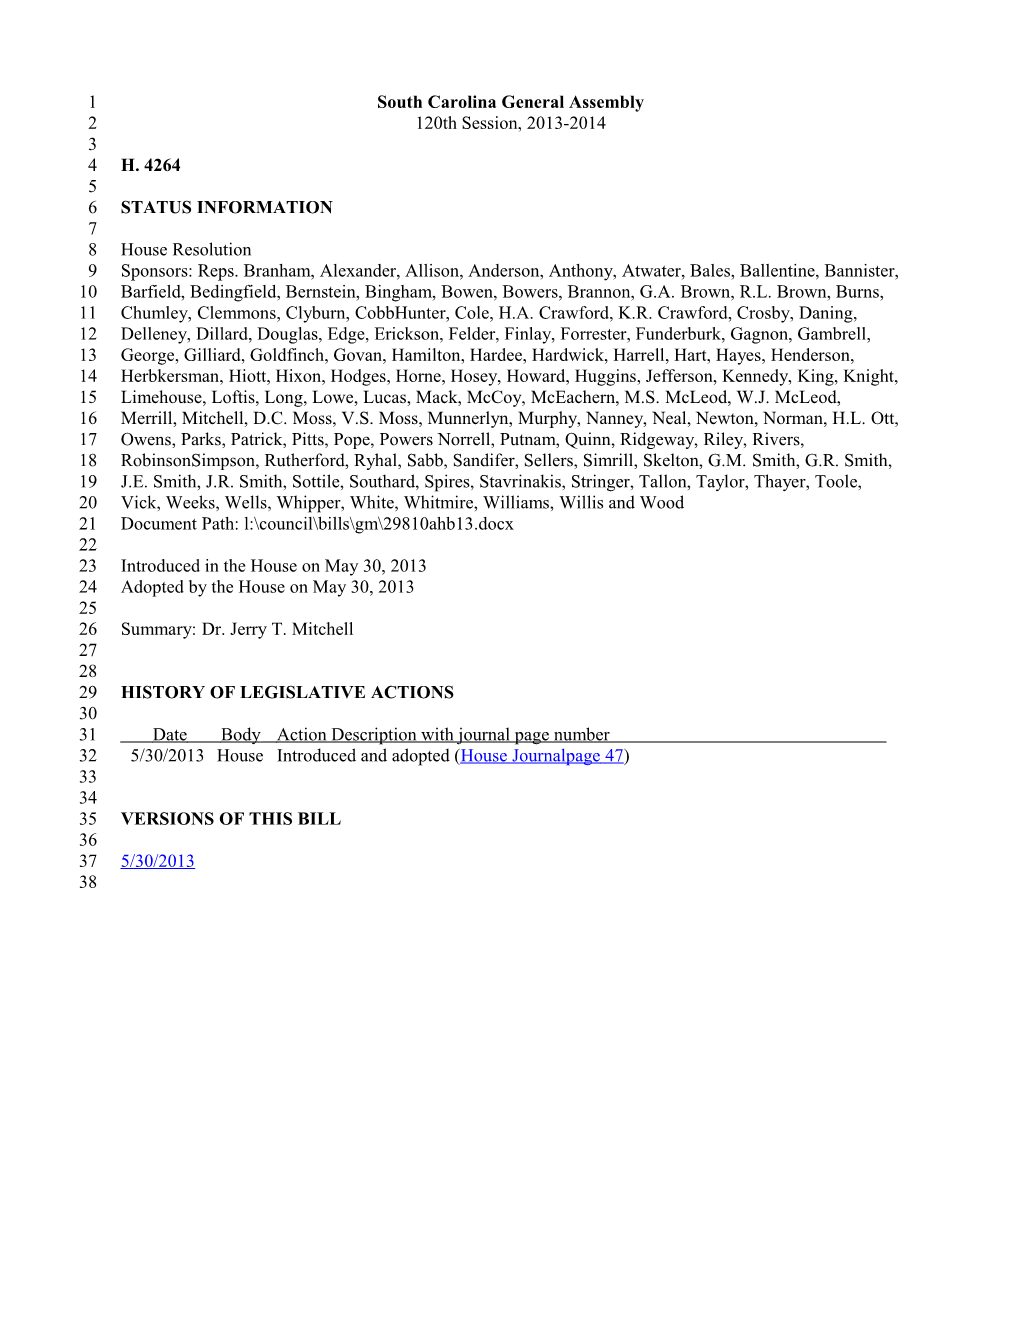 2013-2014 Bill 4264: Dr. Jerry T. Mitchell - South Carolina Legislature Online